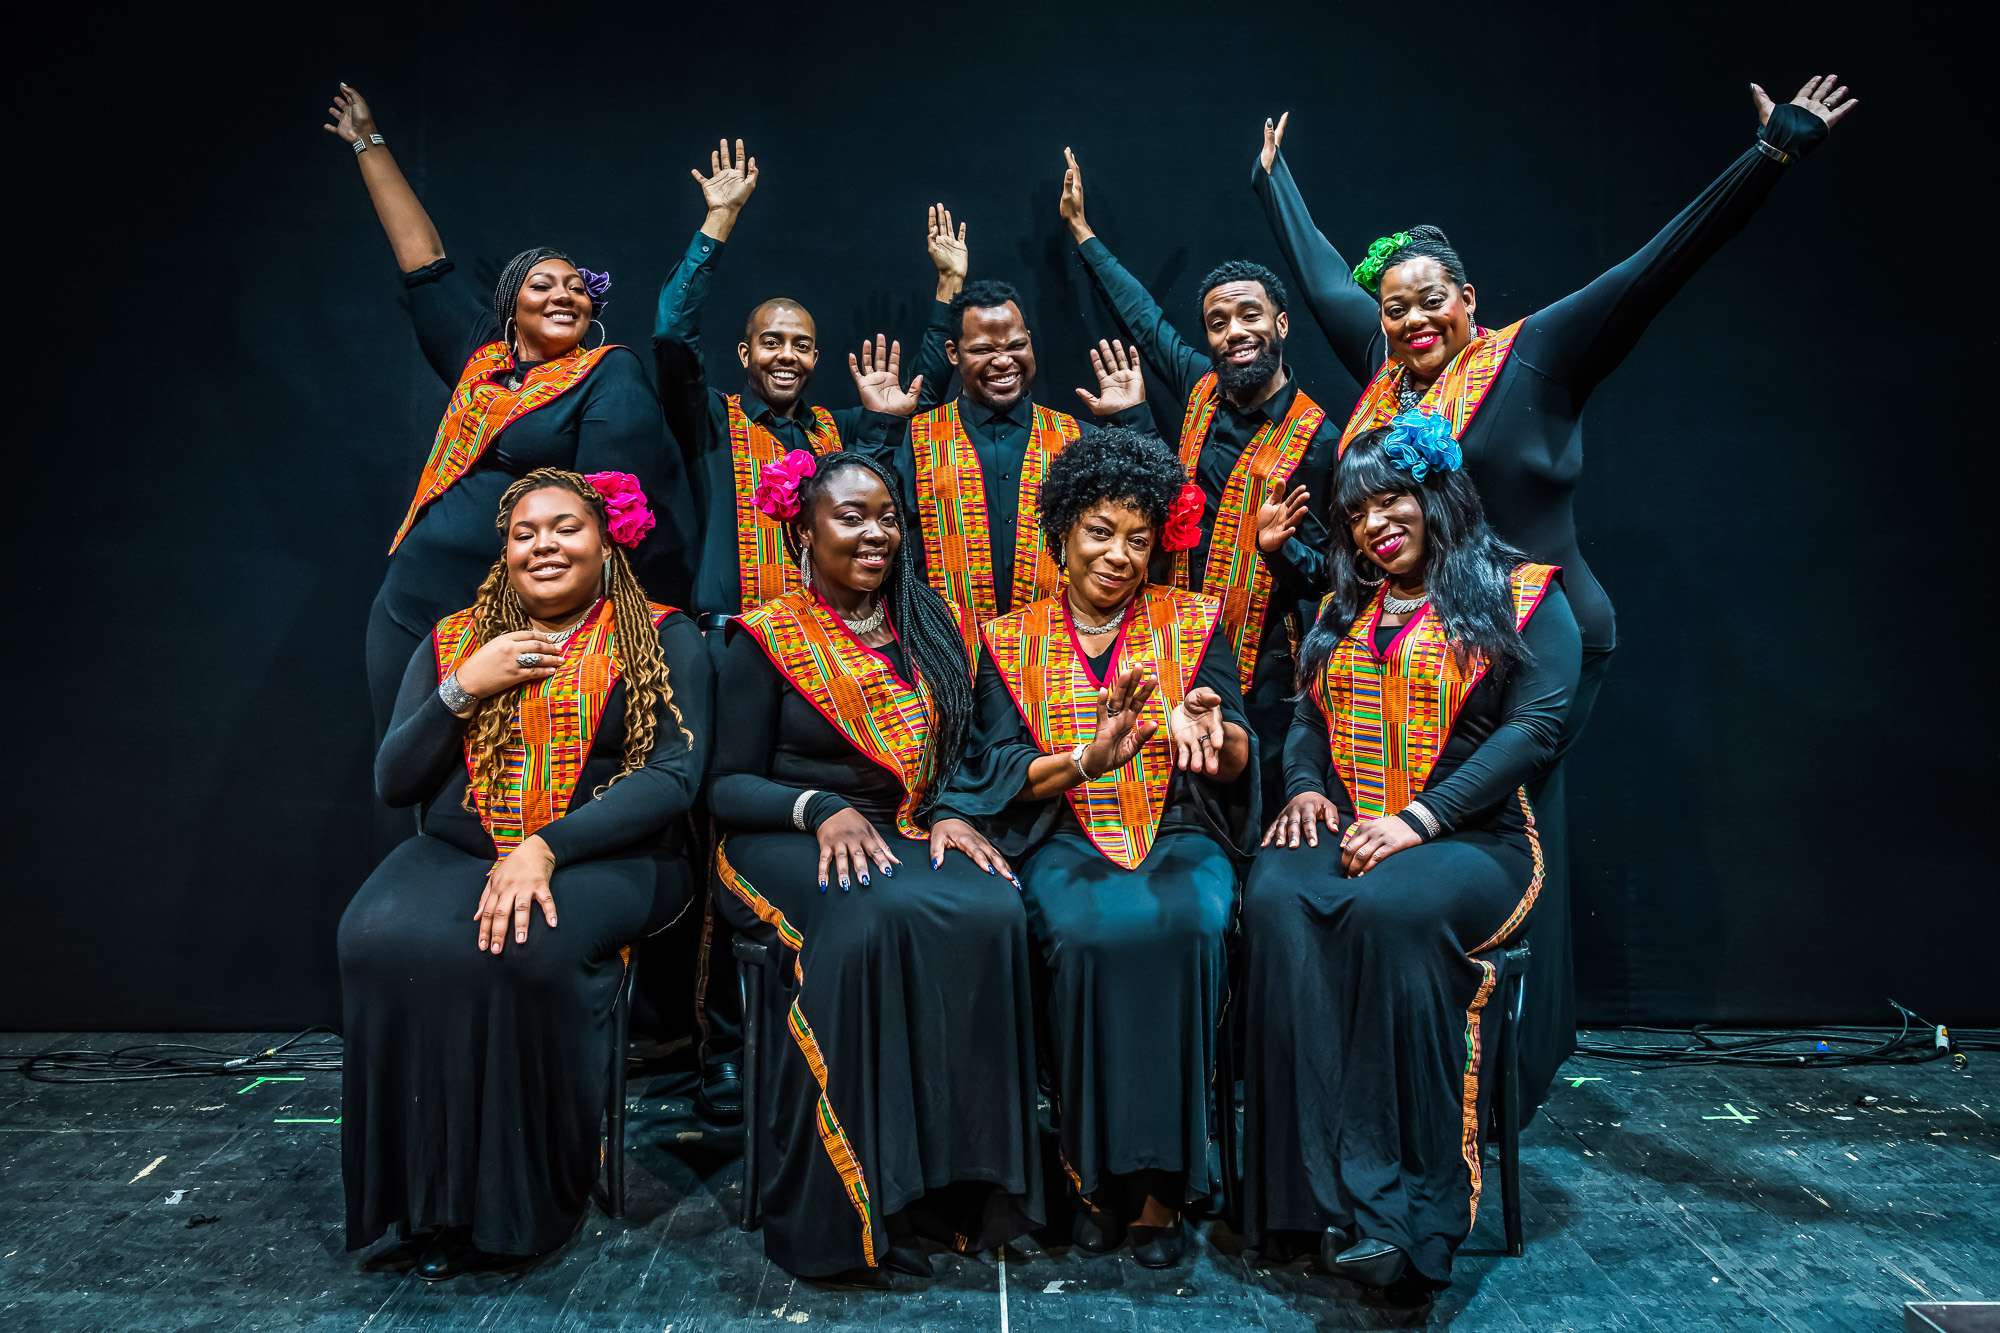 L'Harlem Gospel Choir in scena domenica 5 dicembre al Teatro Superga